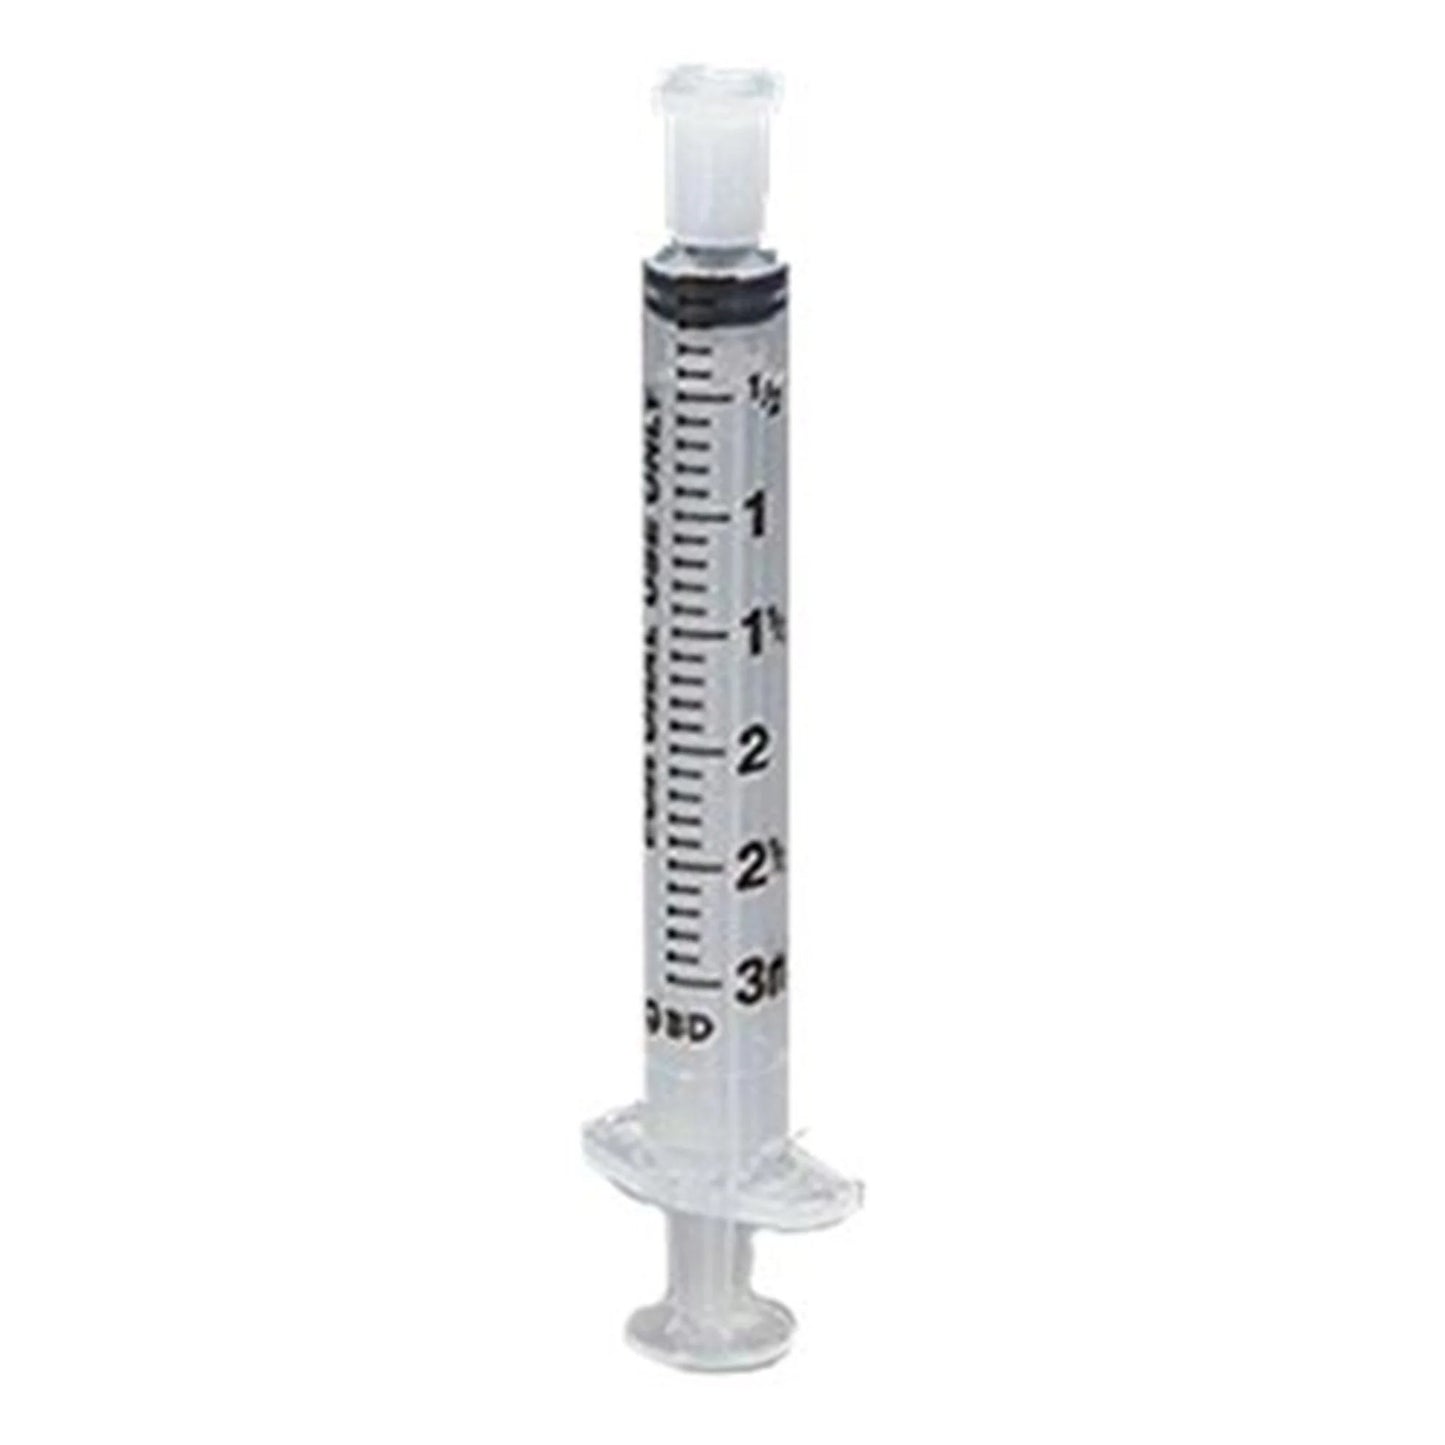 BD Oral Dispenser Syringe, 3 mL